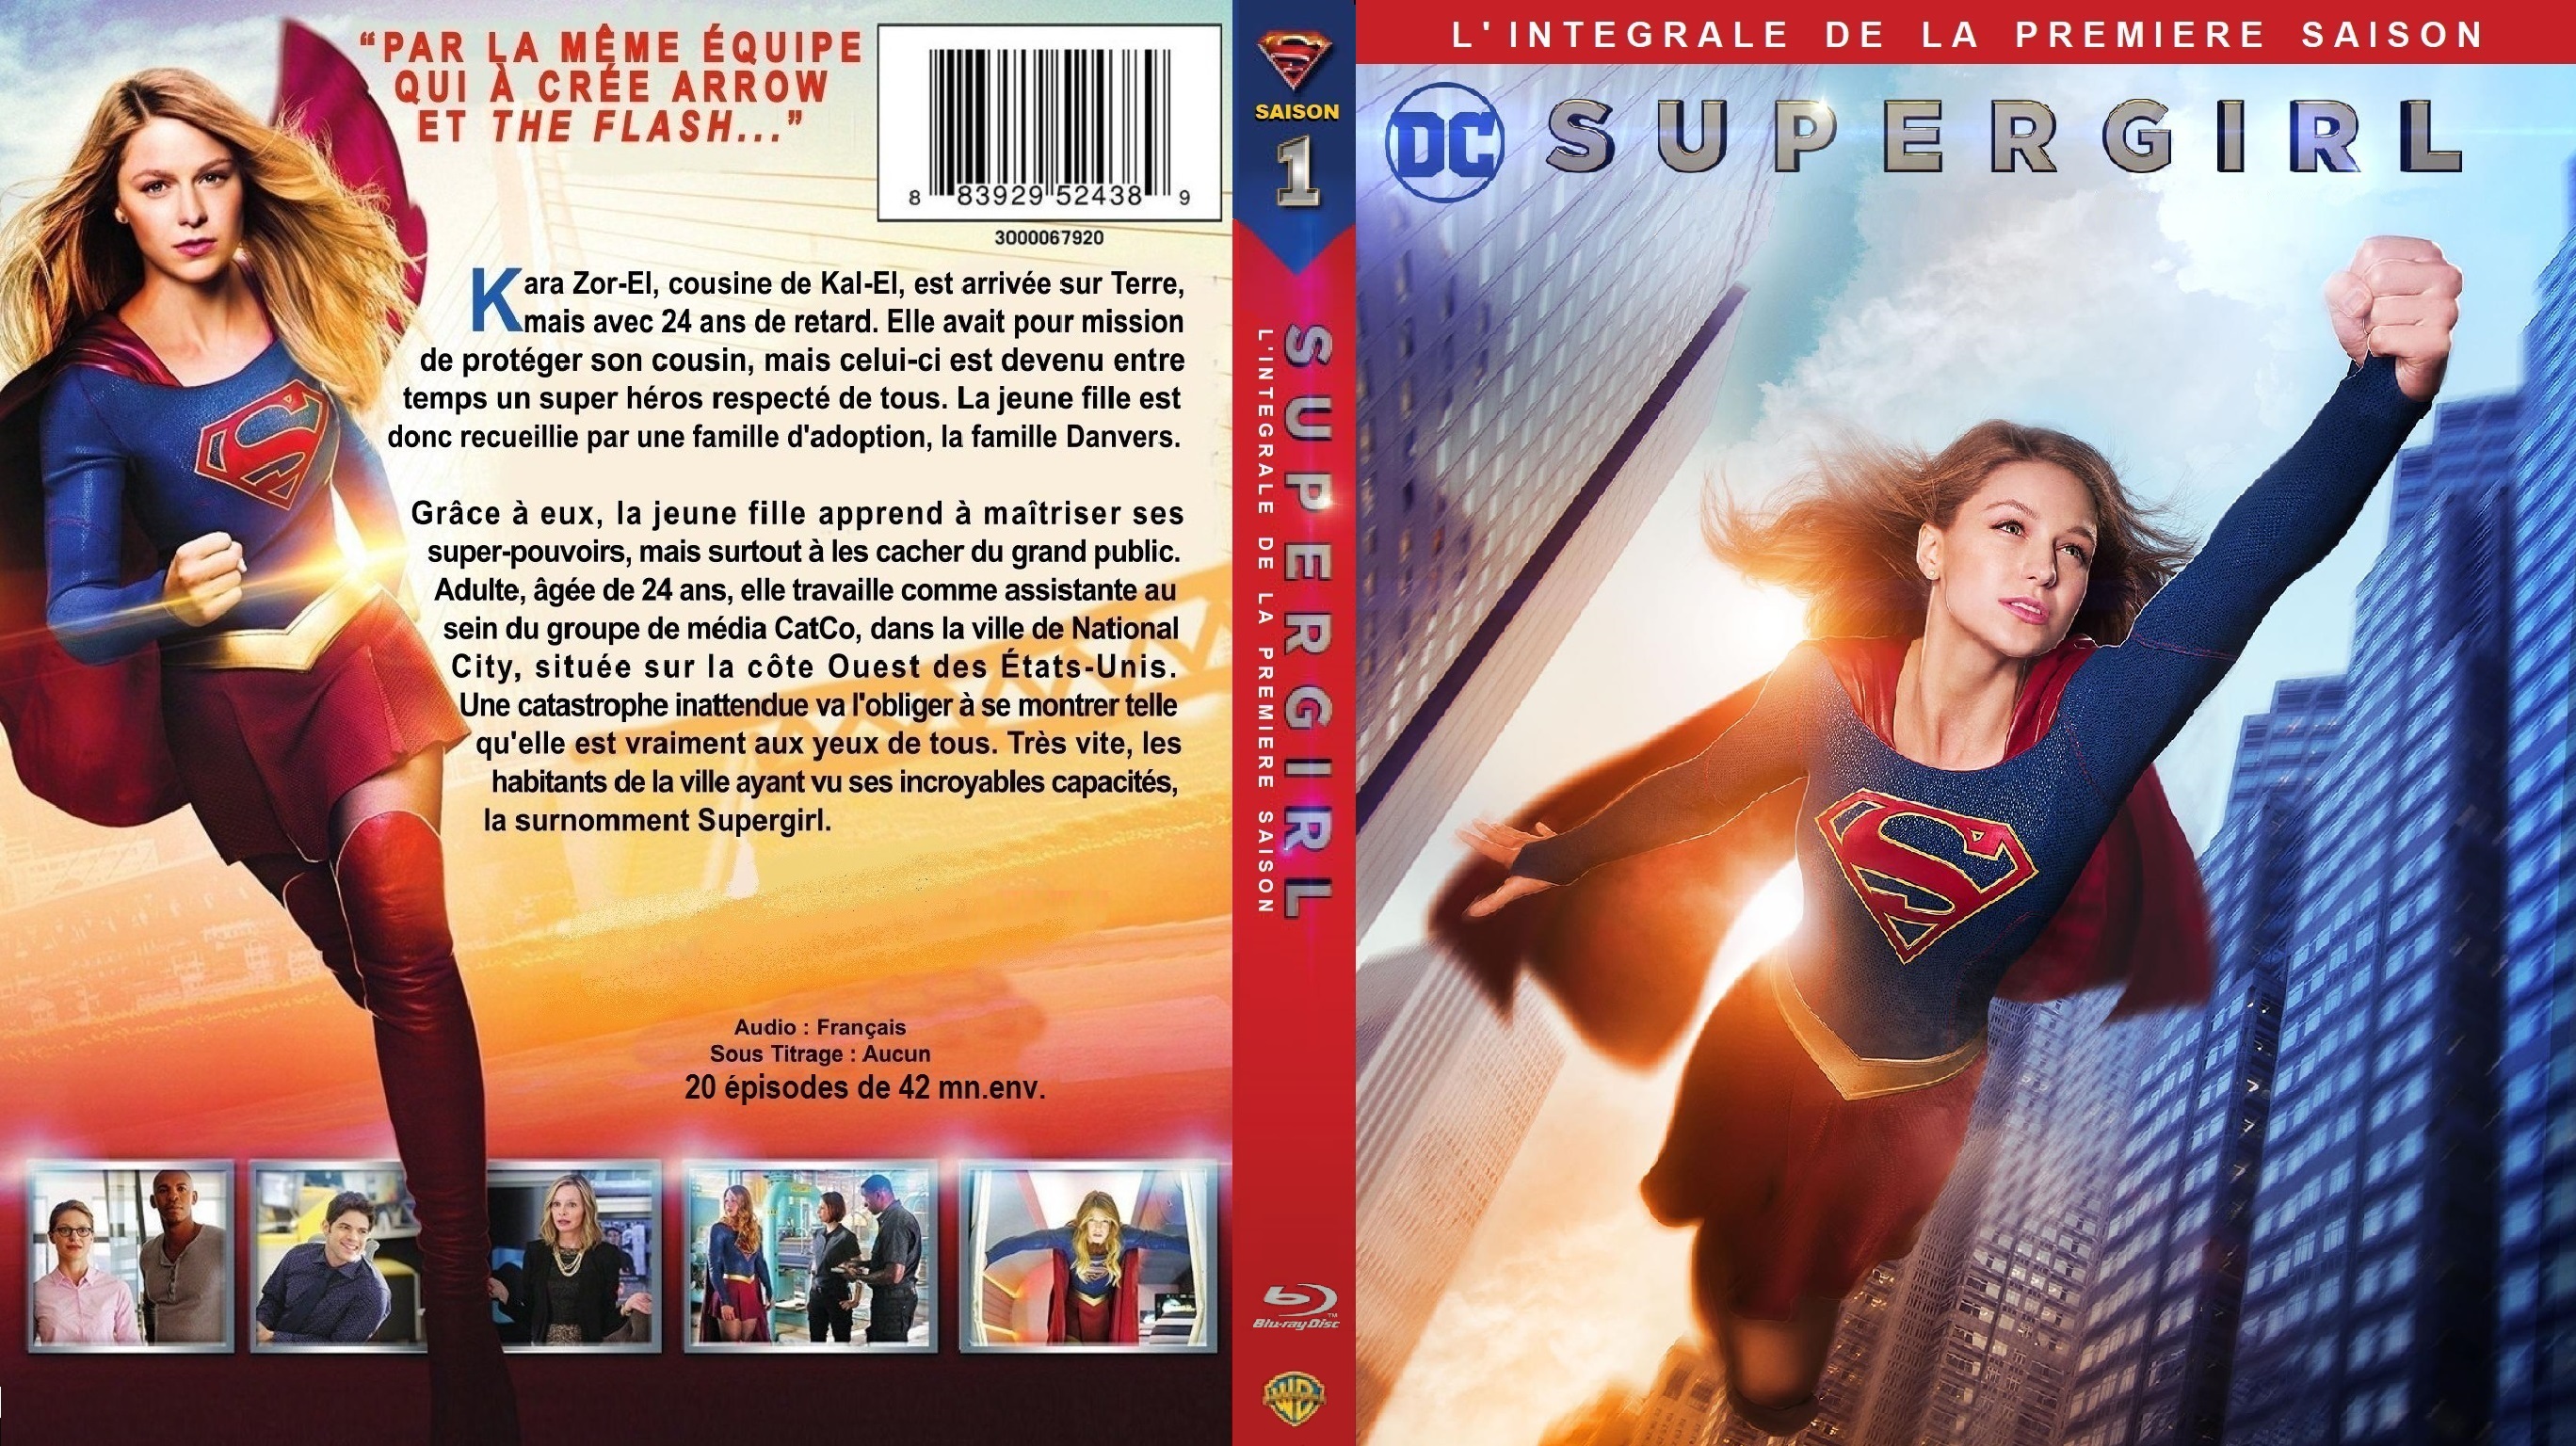 Jaquette DVD Supergirl saison 1 custom (BLU-RAY) v3